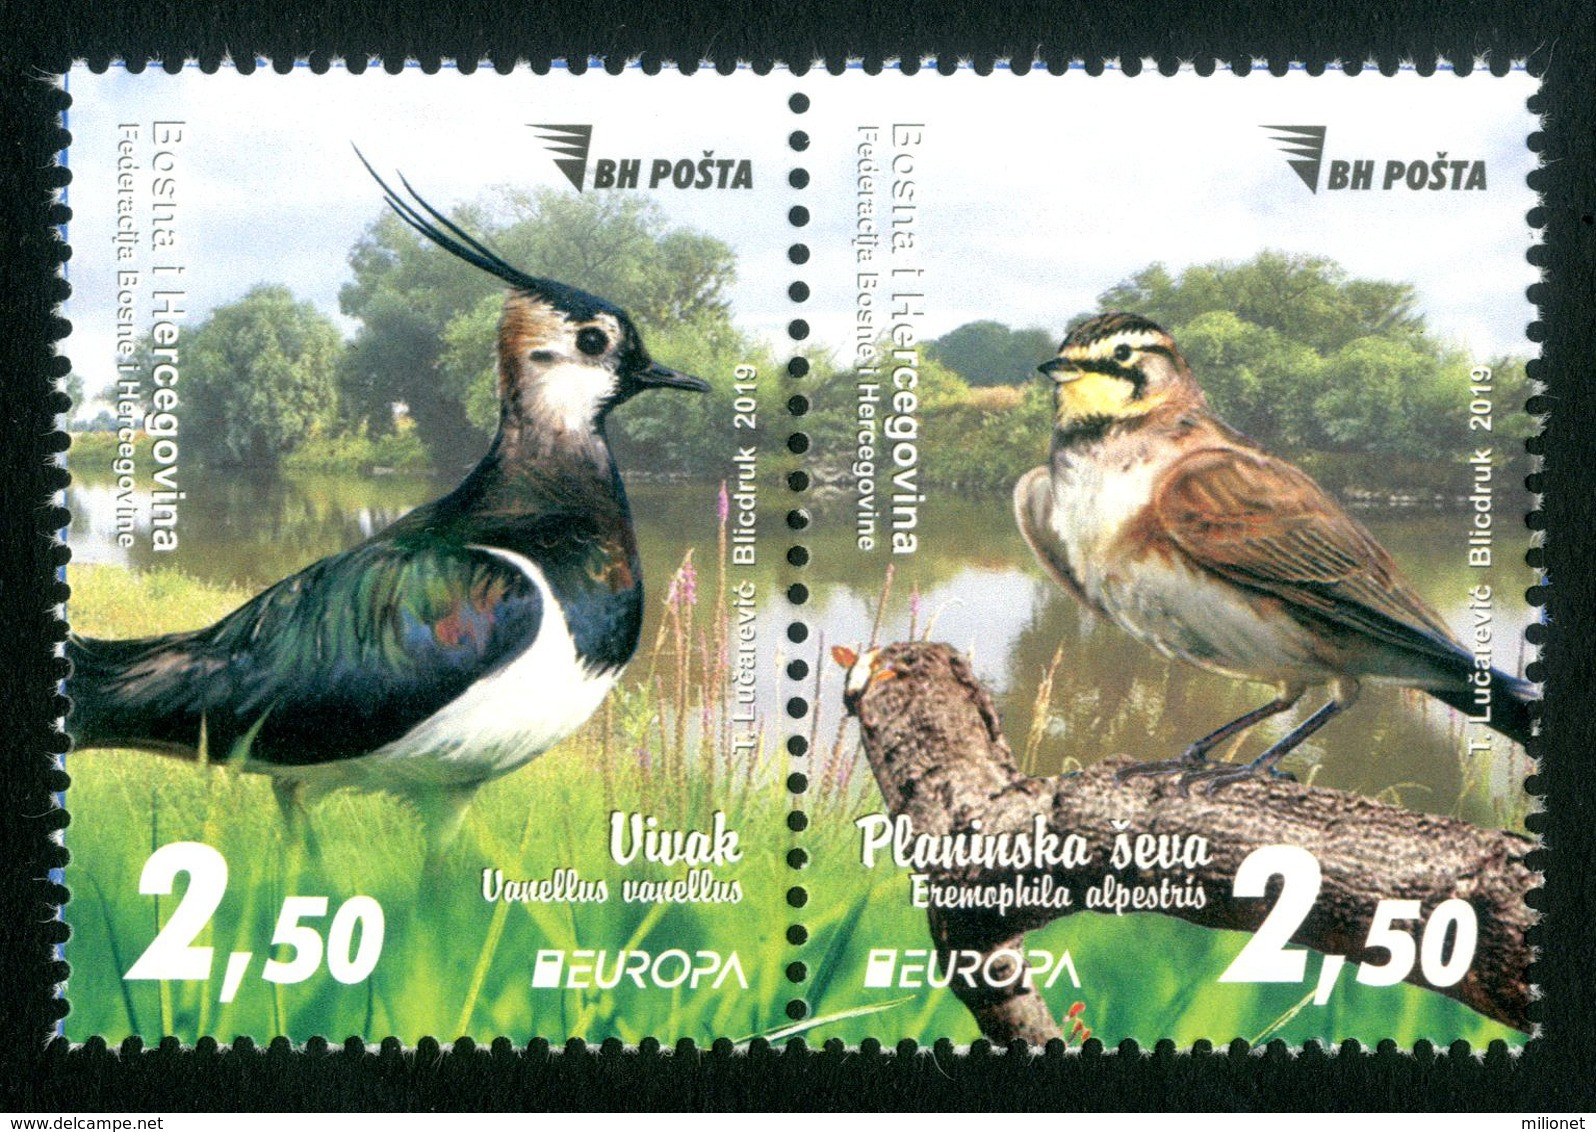 SALE!!! BOSNIA HERZEGOVINA MAIN POST (SARAJEVO) 2019 EUROPA CEPT National Birds 2 Stamps Se-tenant MNH ** - 2019